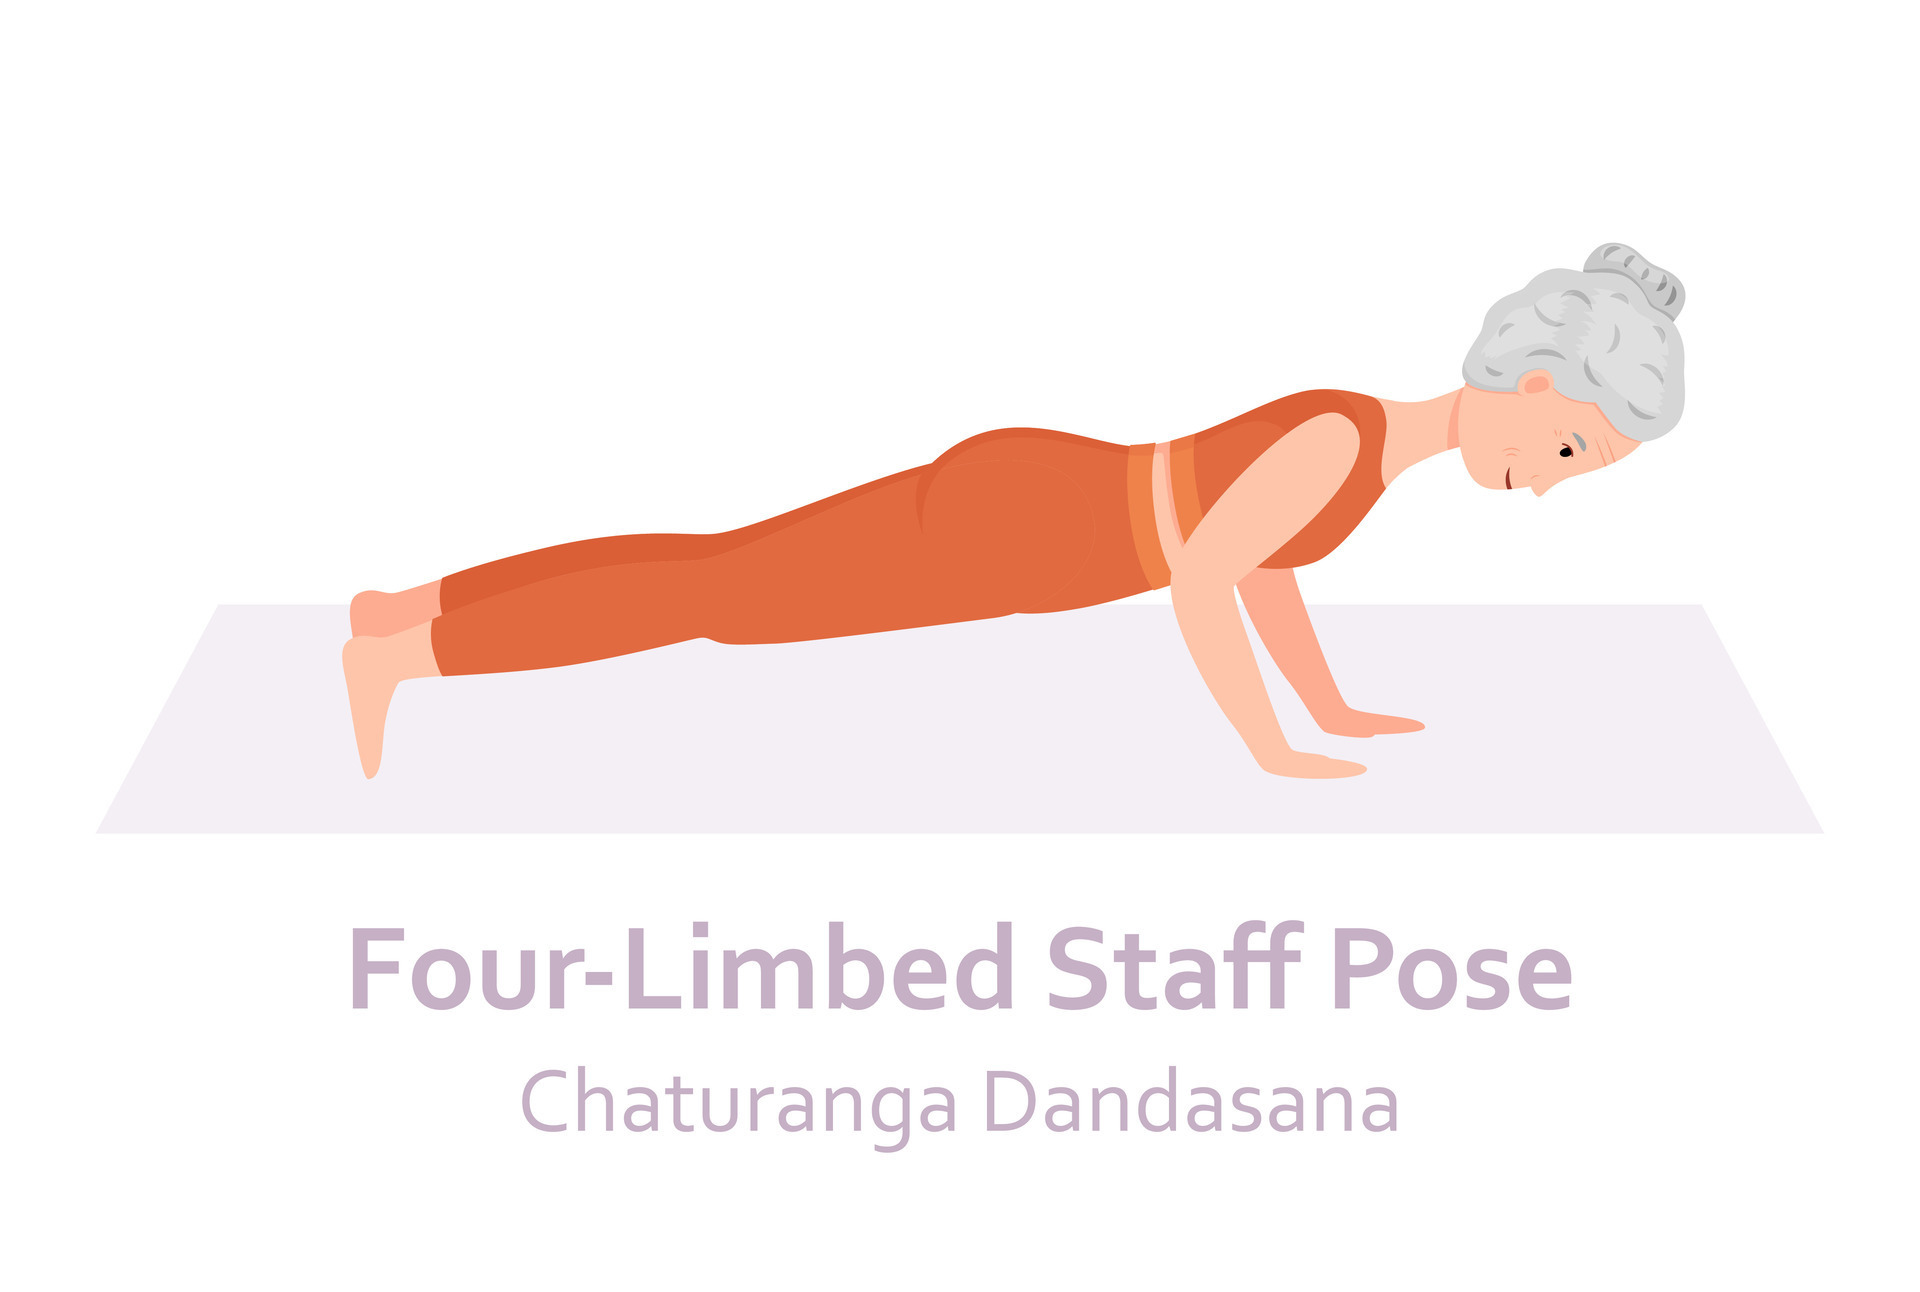 Chaturanga Dandasana: How to Practice Four-Limbed Staff Pose